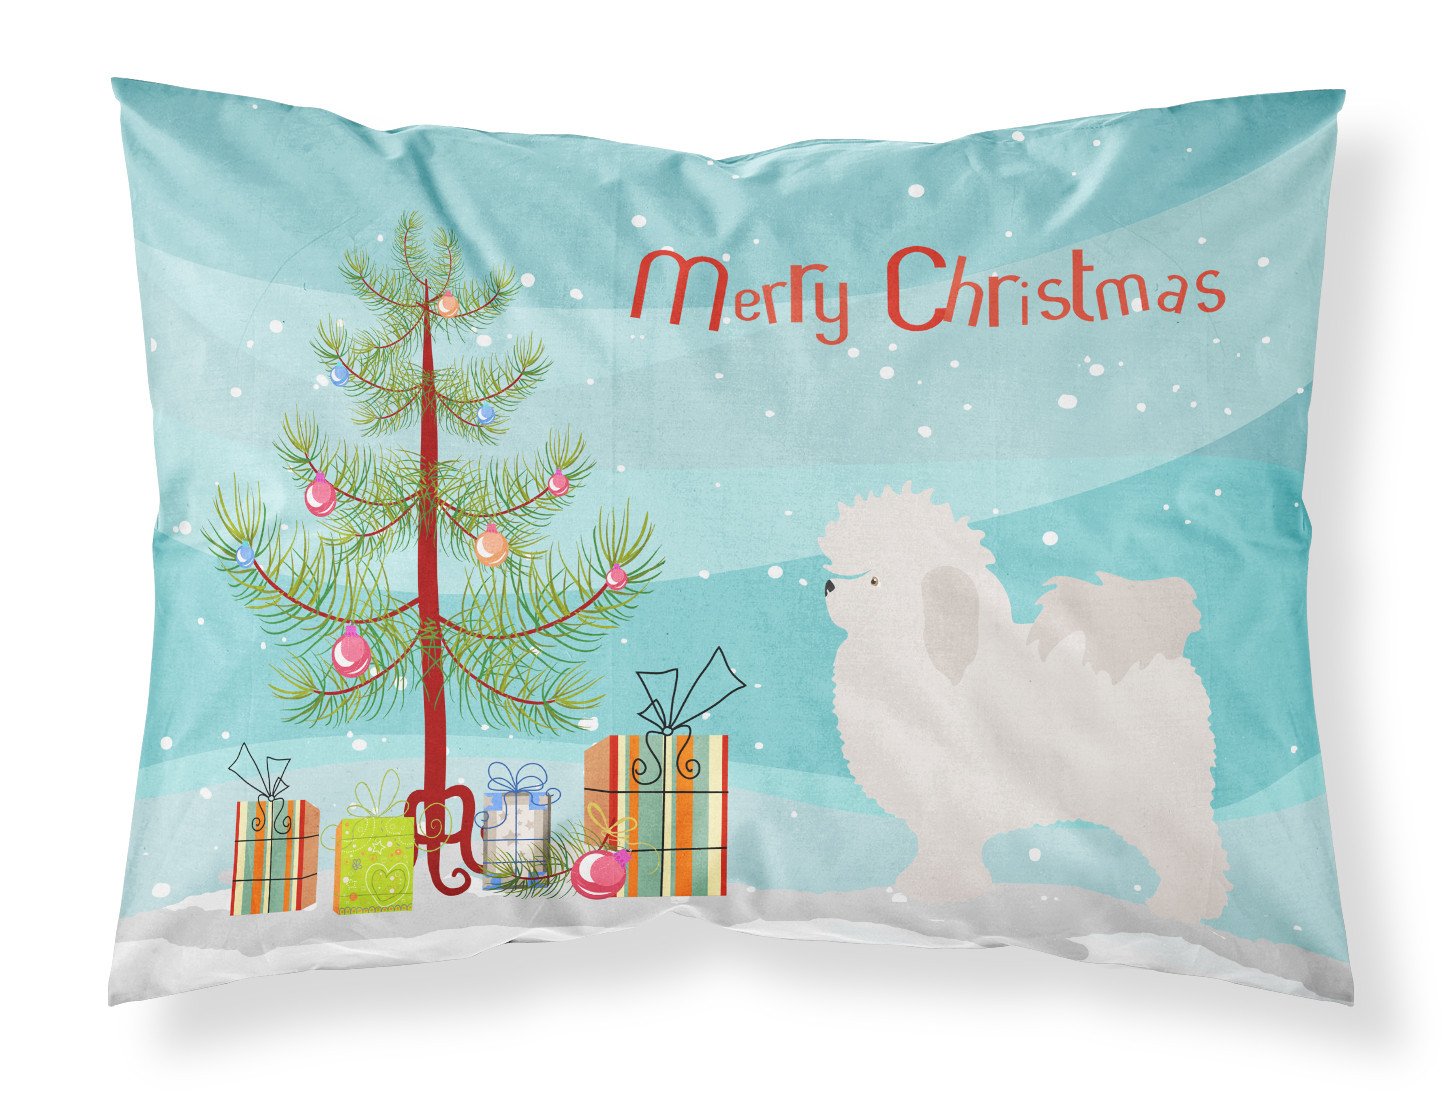 Bolognese Christmas Fabric Standard Pillowcase BB8471PILLOWCASE by Caroline's Treasures